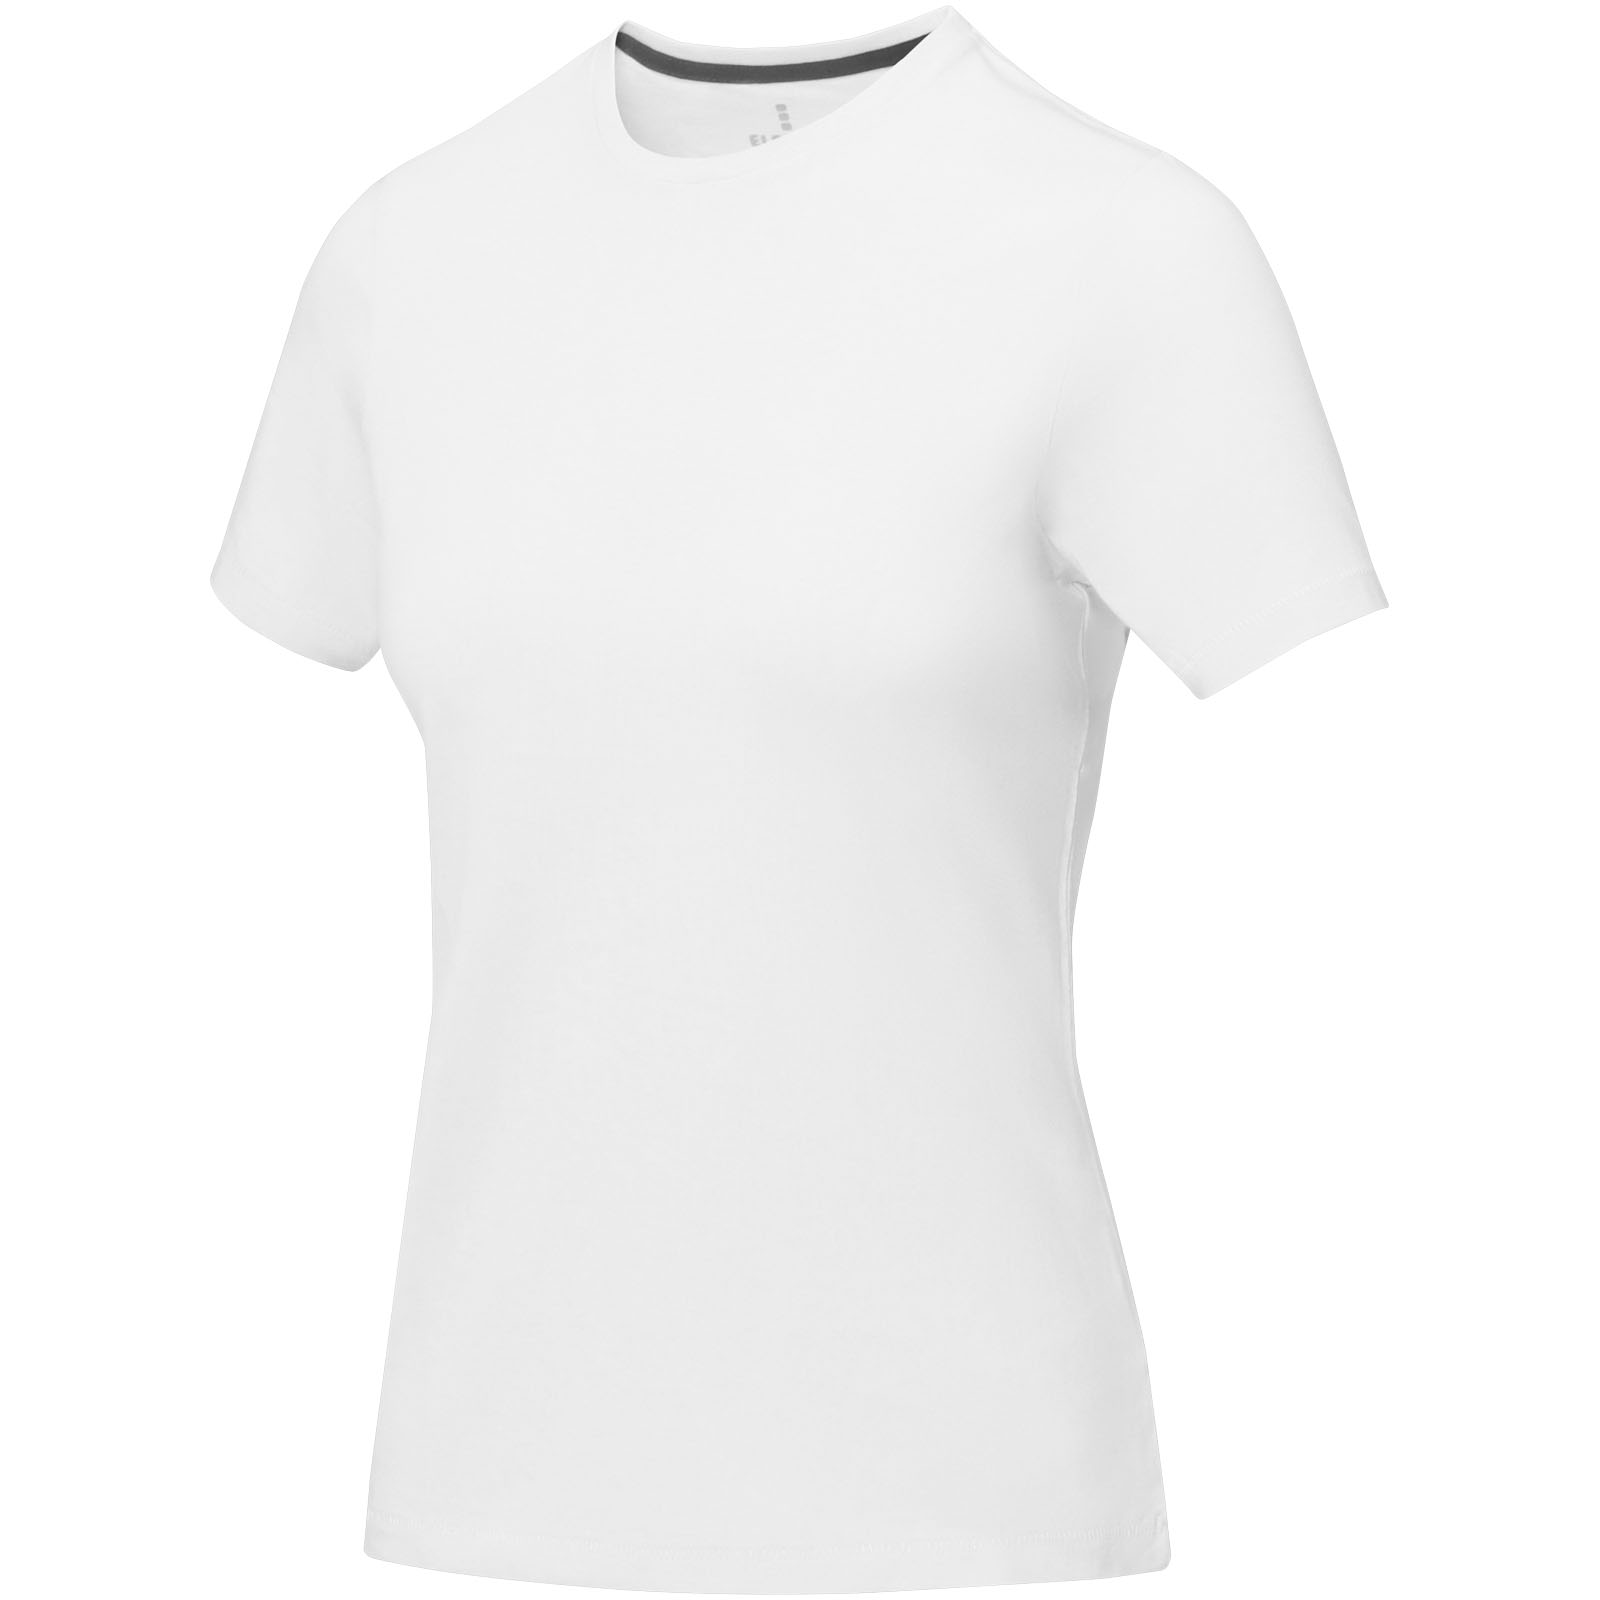 Advertising T-shirts - Nanaimo short sleeve women's t-shirt - 0